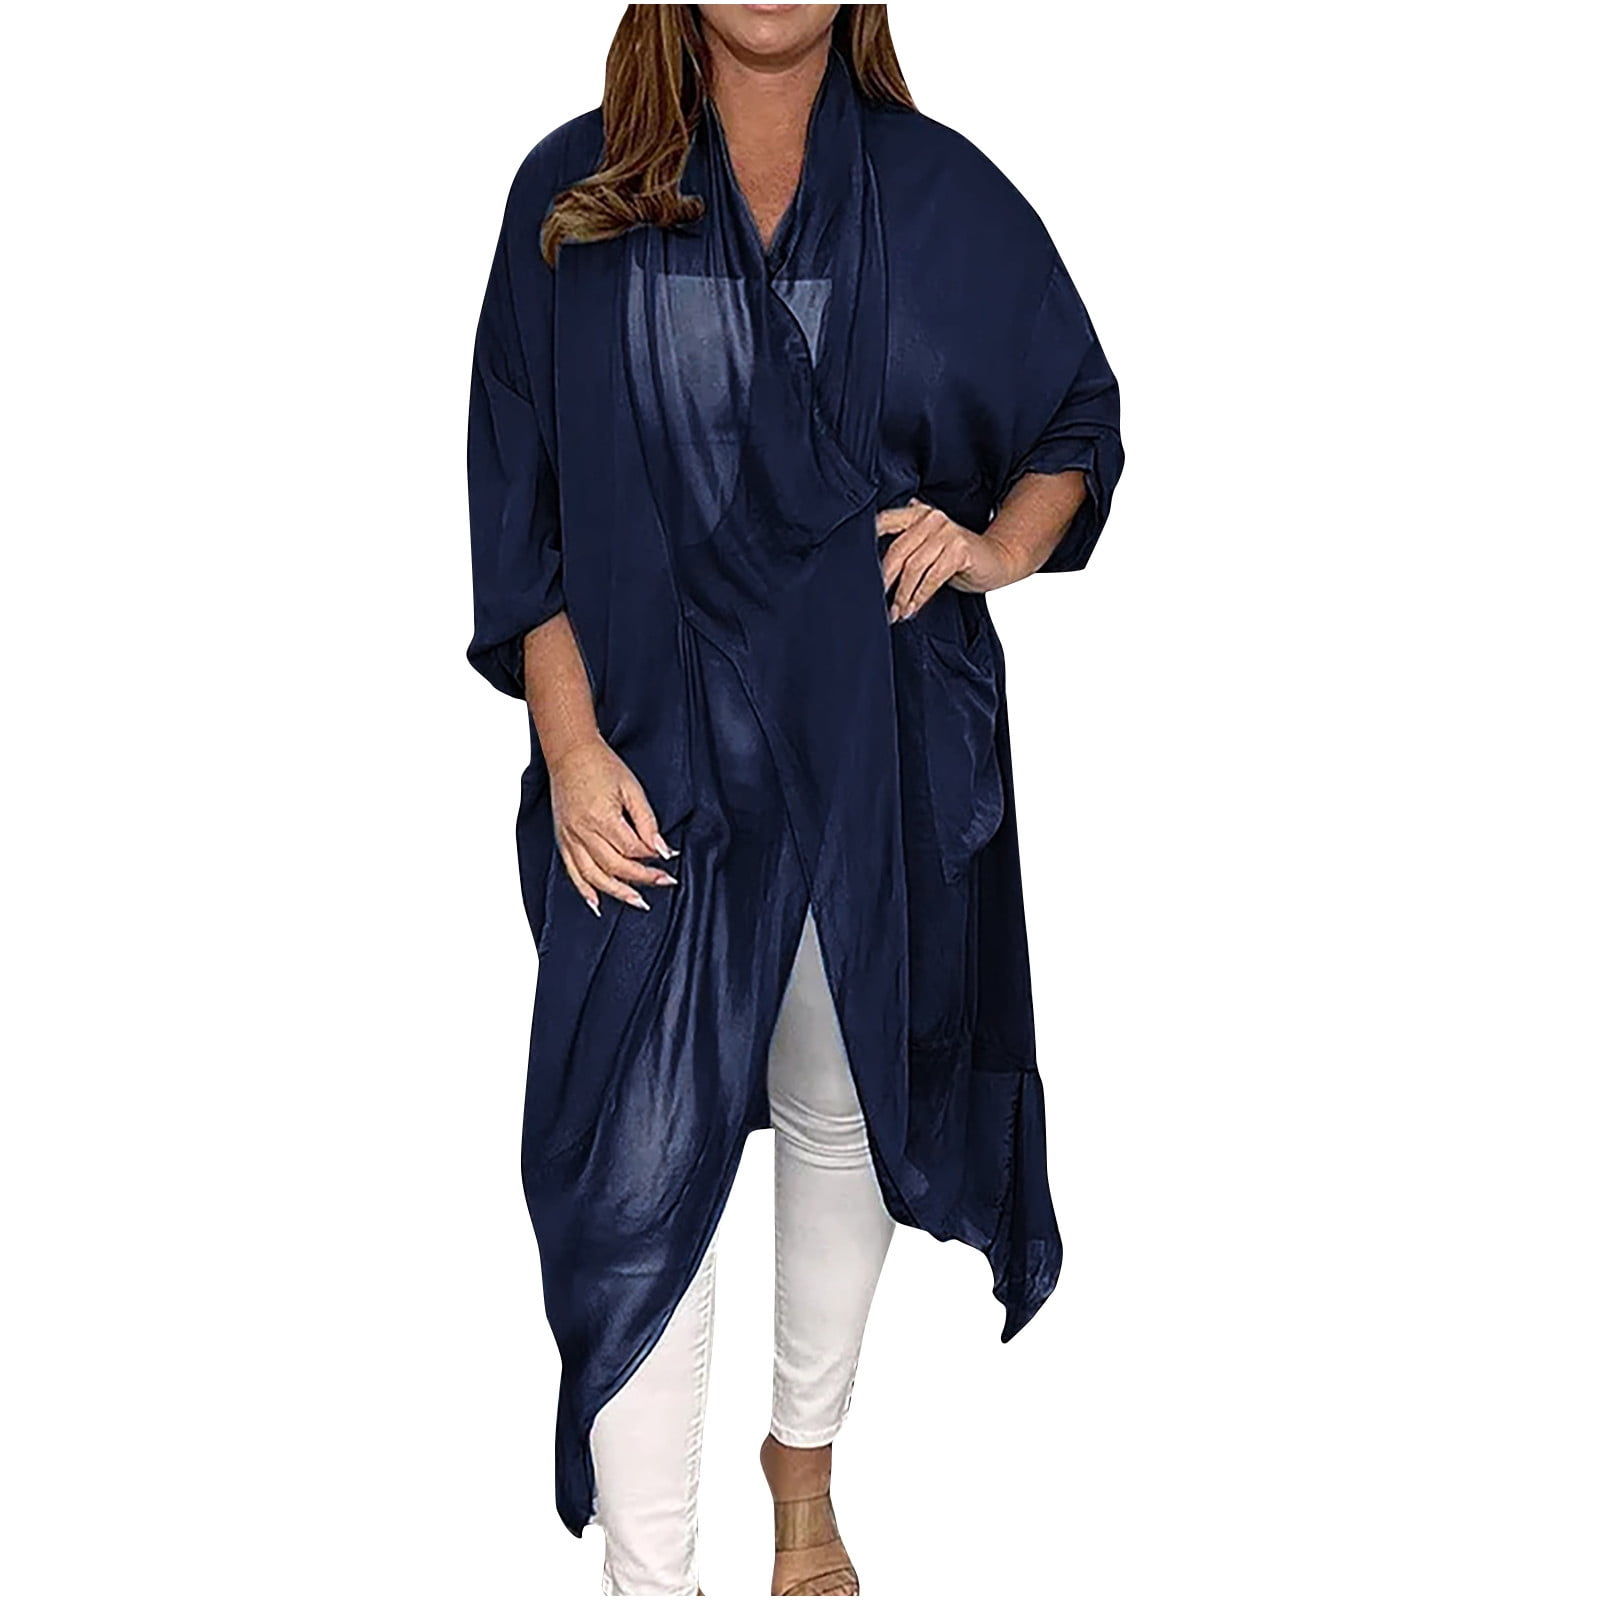 EDHITNR Cardigan for Women Long Loose Breathable Cardigan Solid Color  Chiffon Cardigan Coat Dark Blue 2XL # Flash Sales Today Deals Prime 